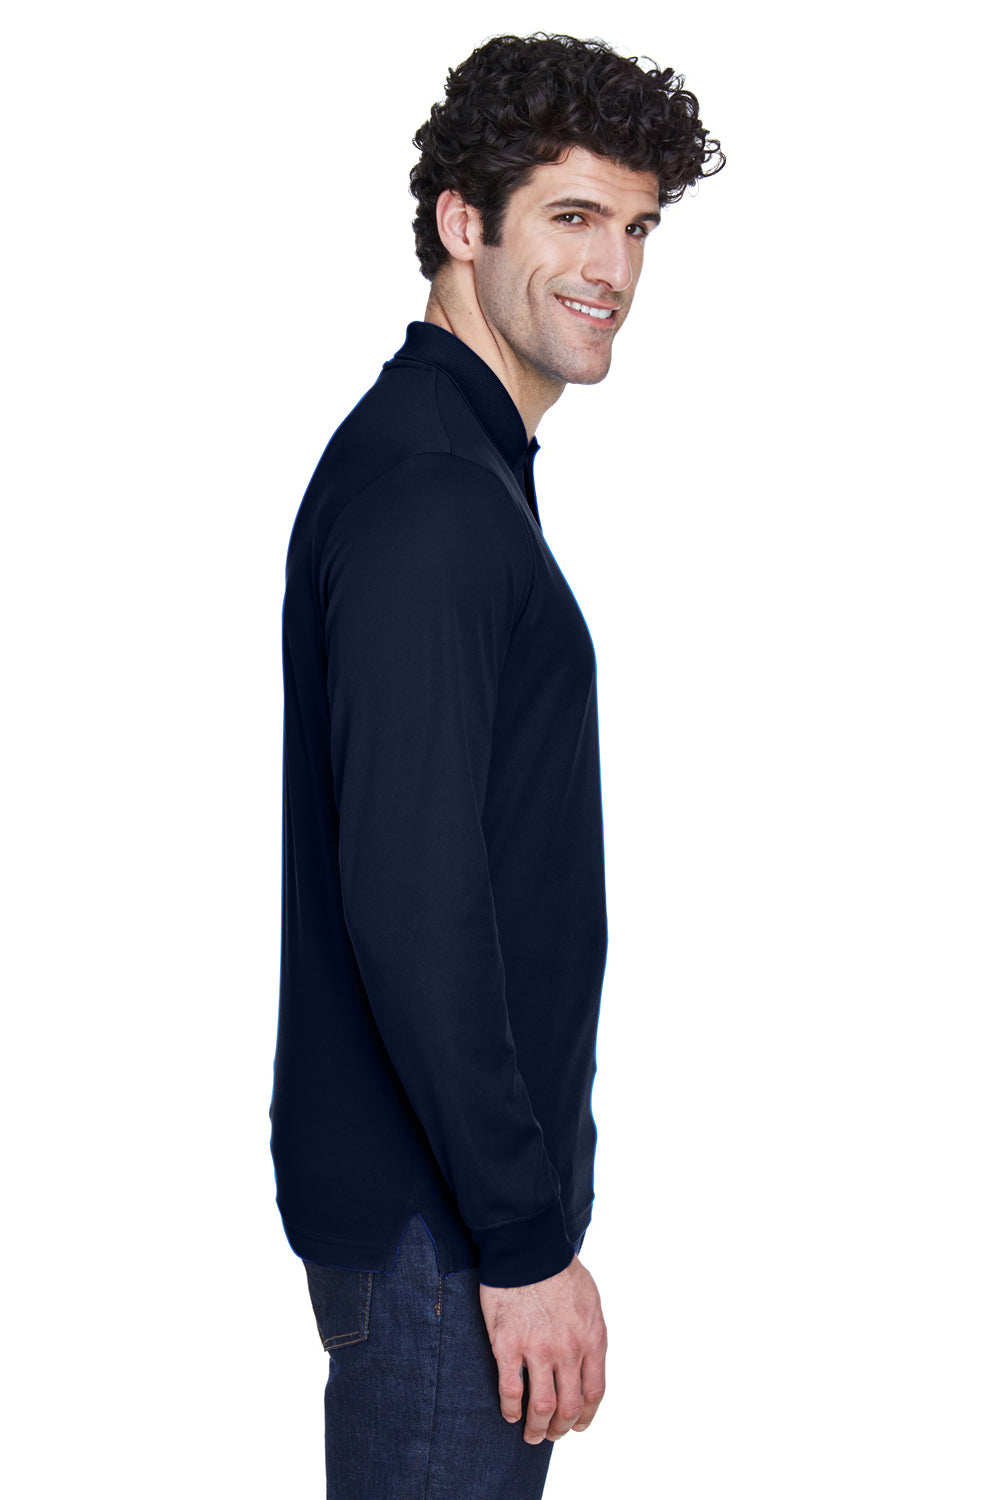 Core 365 88192 Mens Pinnacle Performance Moisture Wicking Long Sleeve Polo Shirt Navy Blue Side